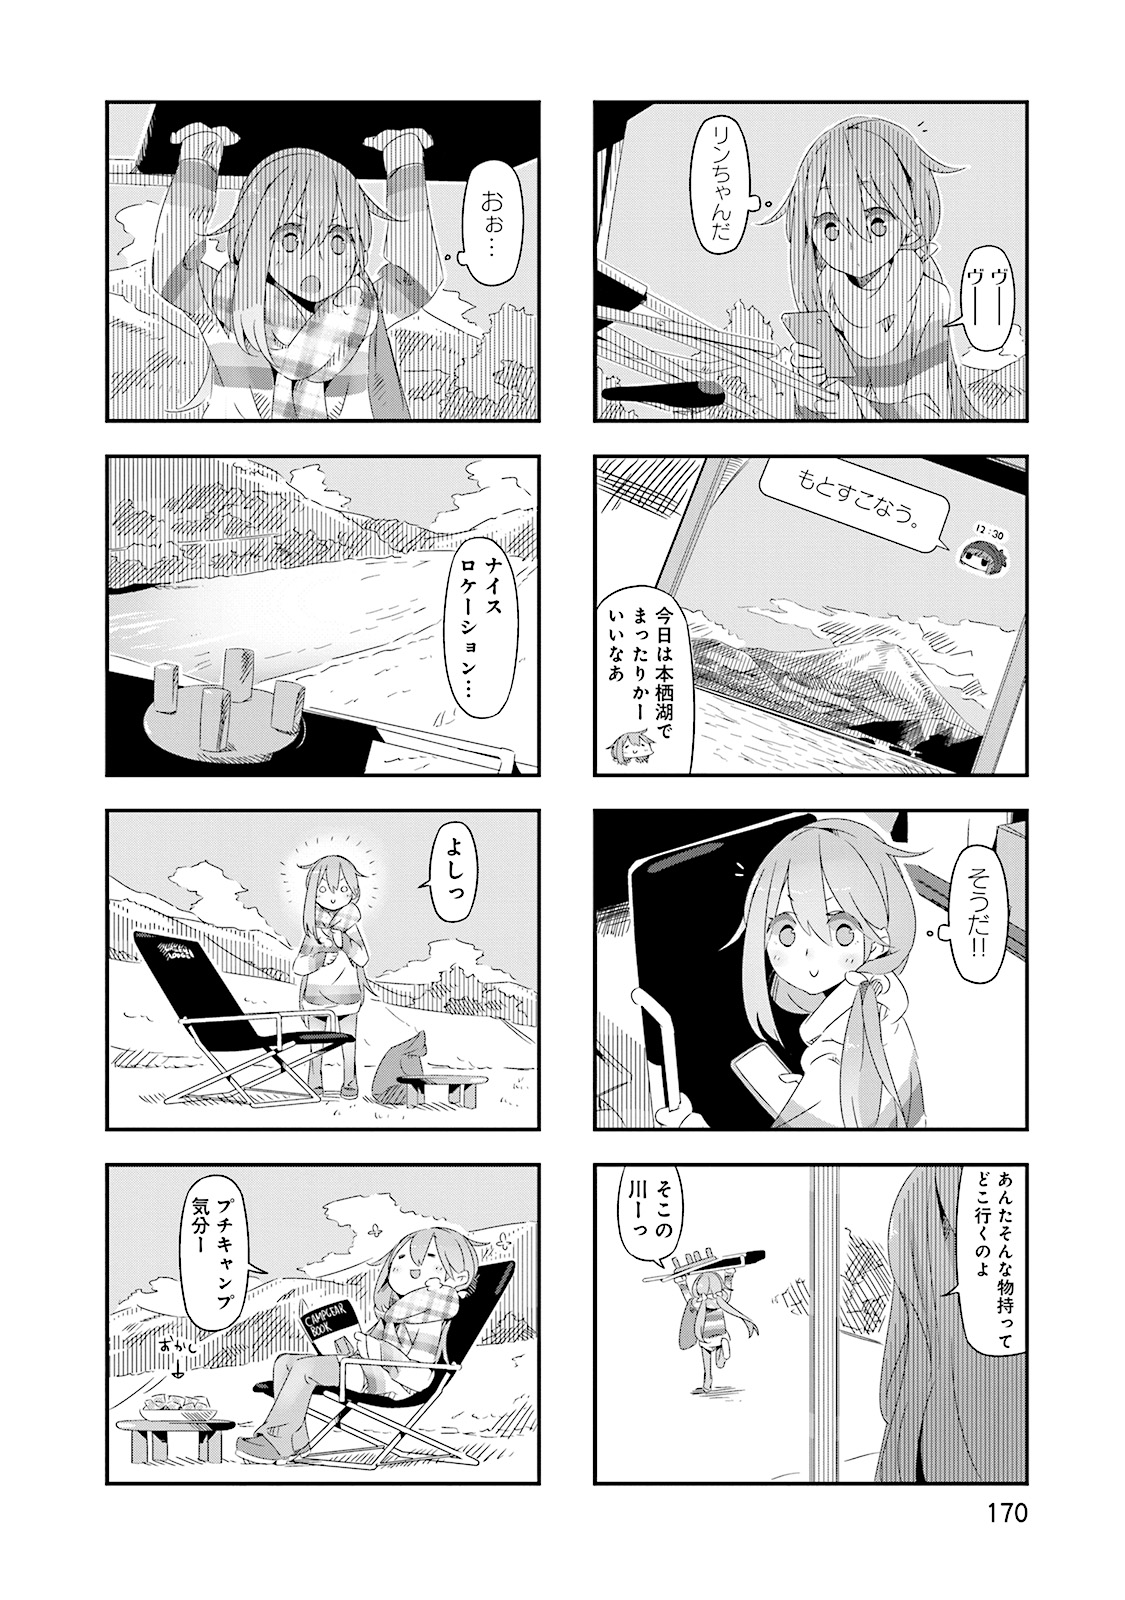 Yuru Camp - Chapter 6.5 - Page 4